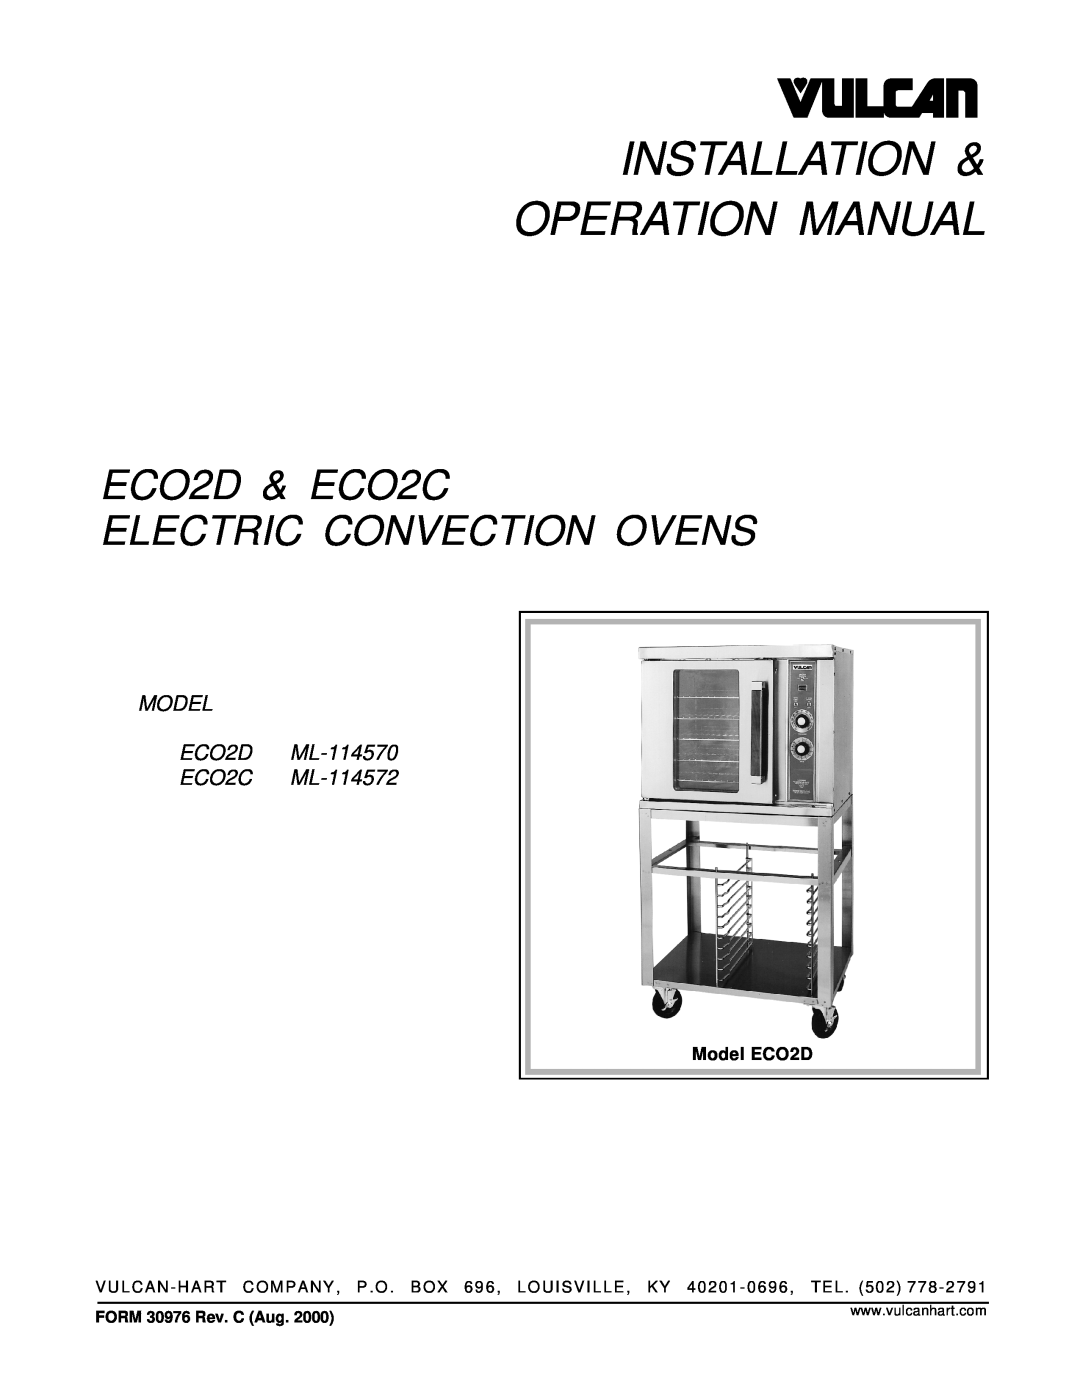 Vulcan-Hart ECO2C ML-114572, ECO2D ML-114570 operation manual ECO2D & ECO2C ELECTRIC CONVECTION OVENS, Model ECO2D 